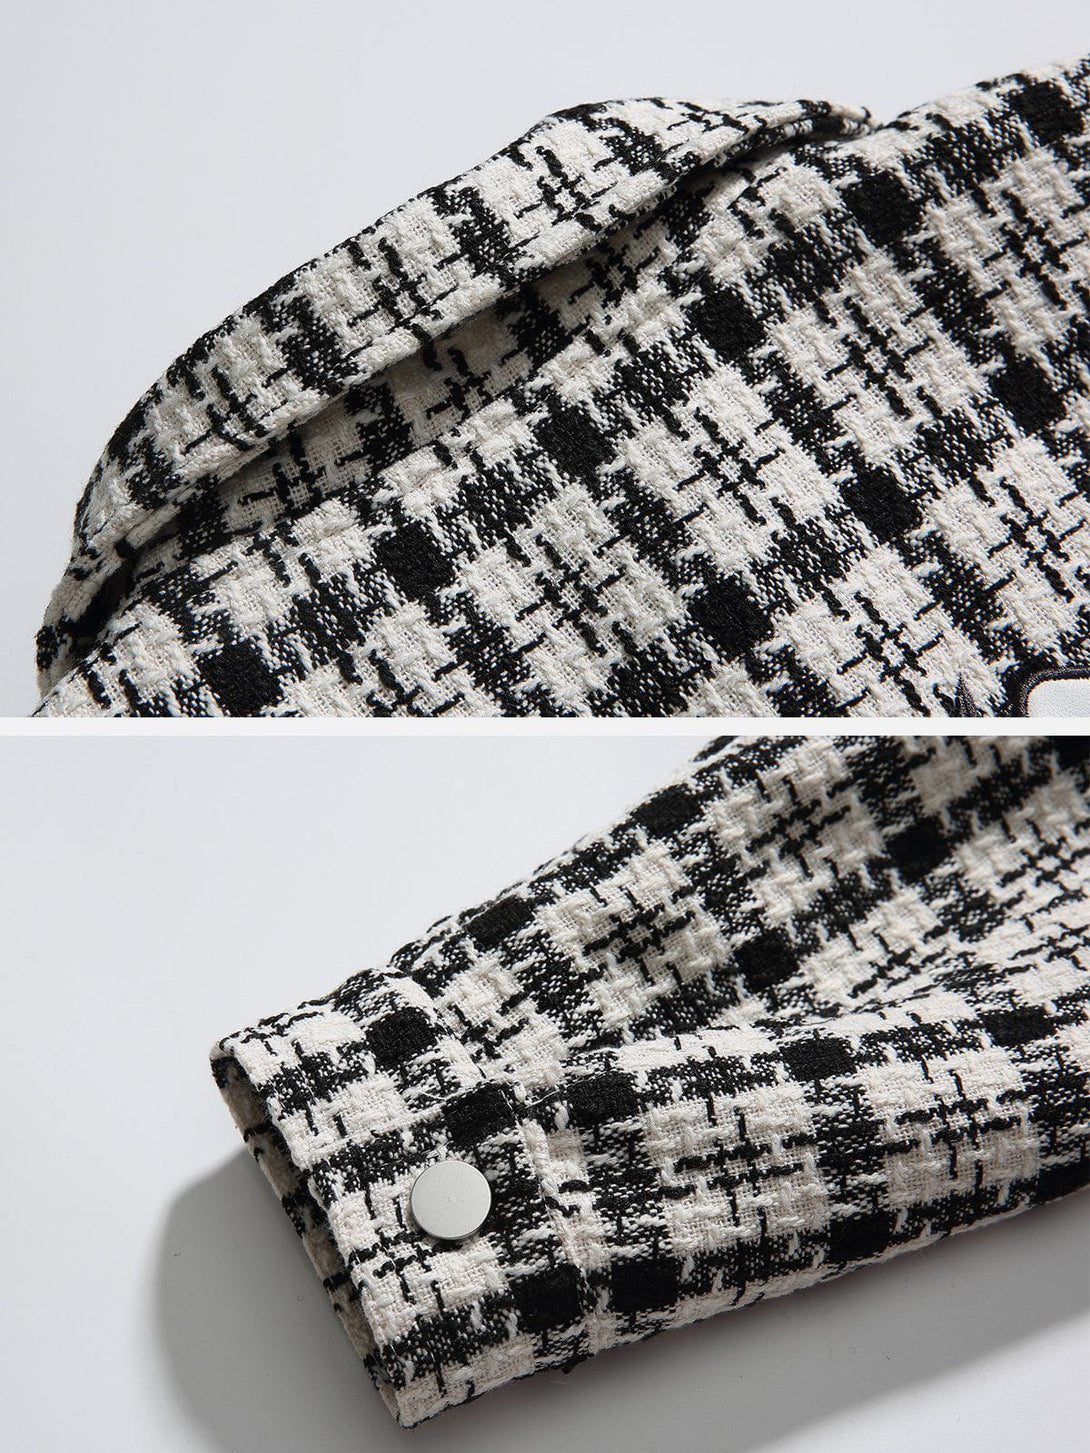 AlanBalen® - Embroidery Checkerboard Jacket AlanBalen